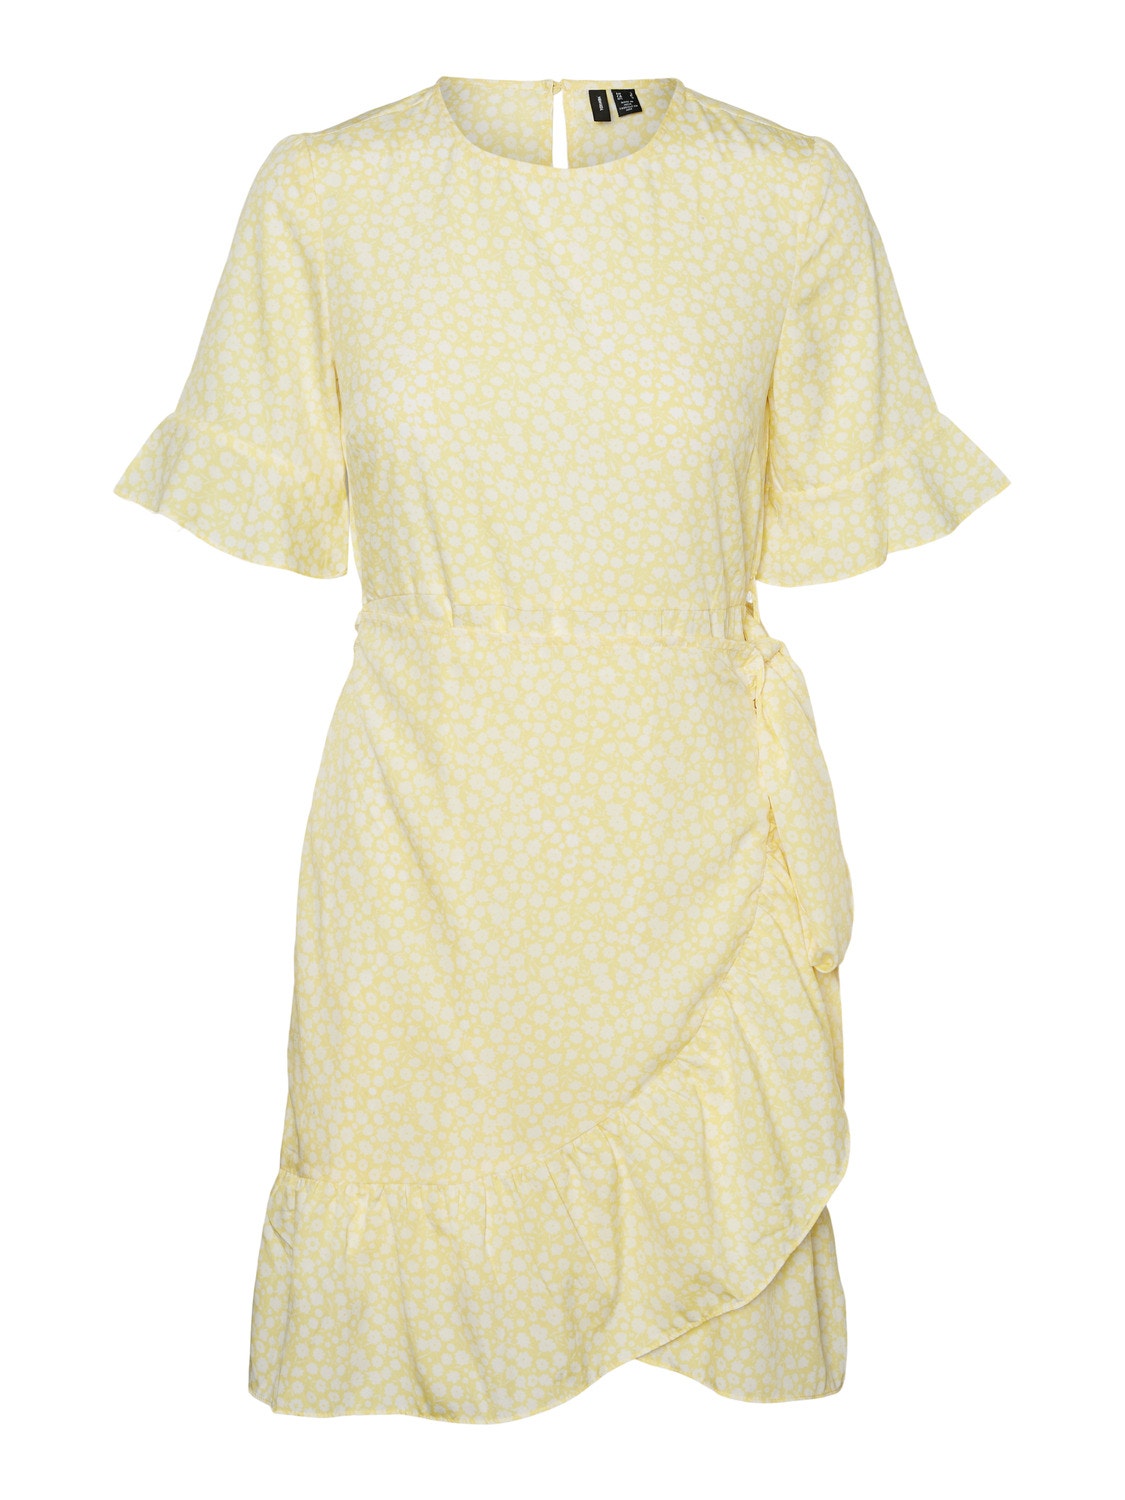 VMHENNA Short dress with 40% Vero discount! Moda® 